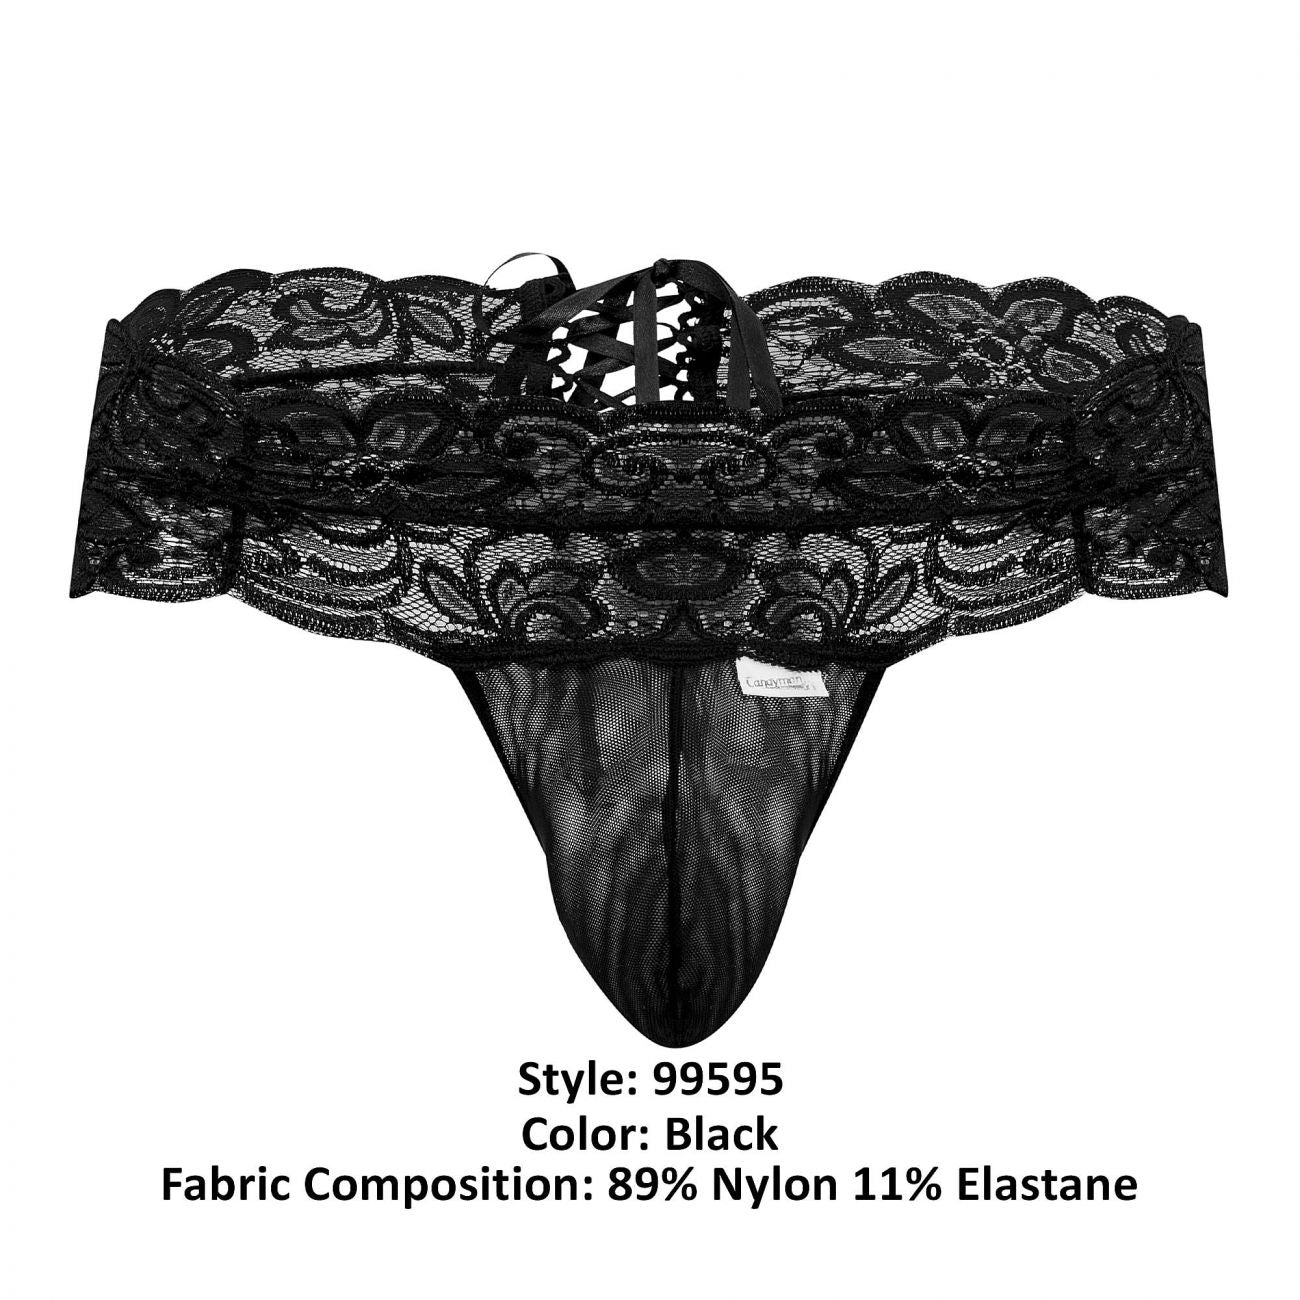 CandyMan 99595 Floral Lace Thongs Black